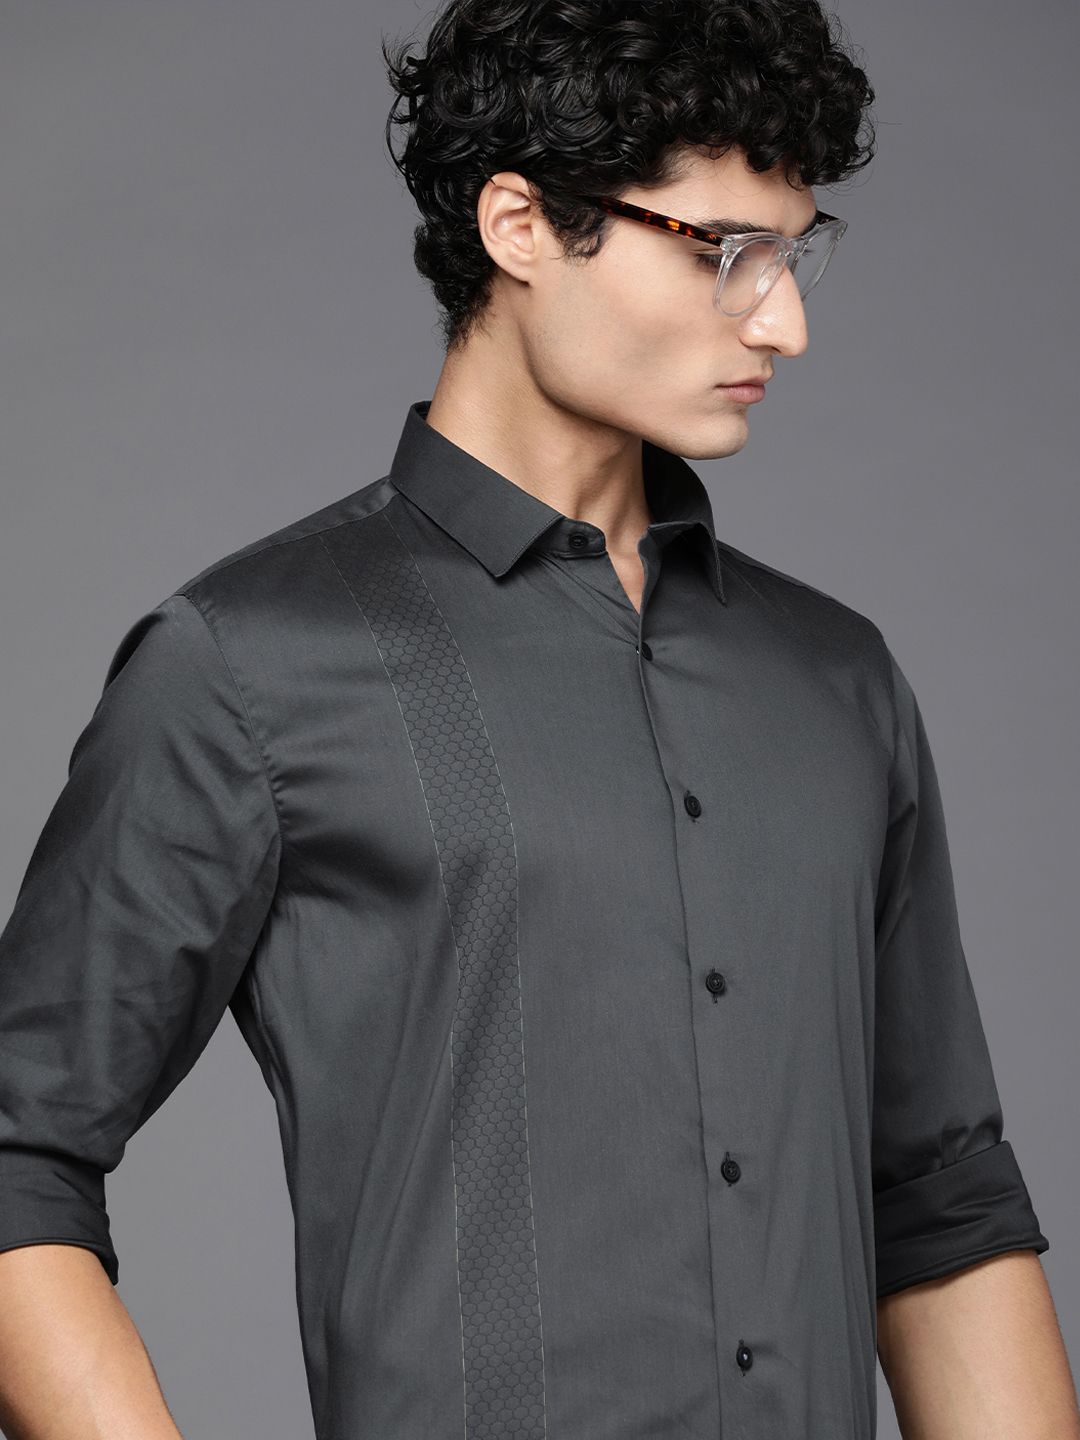 Louis Philippe Shirts  Formal shirts for men, Men stylish dress